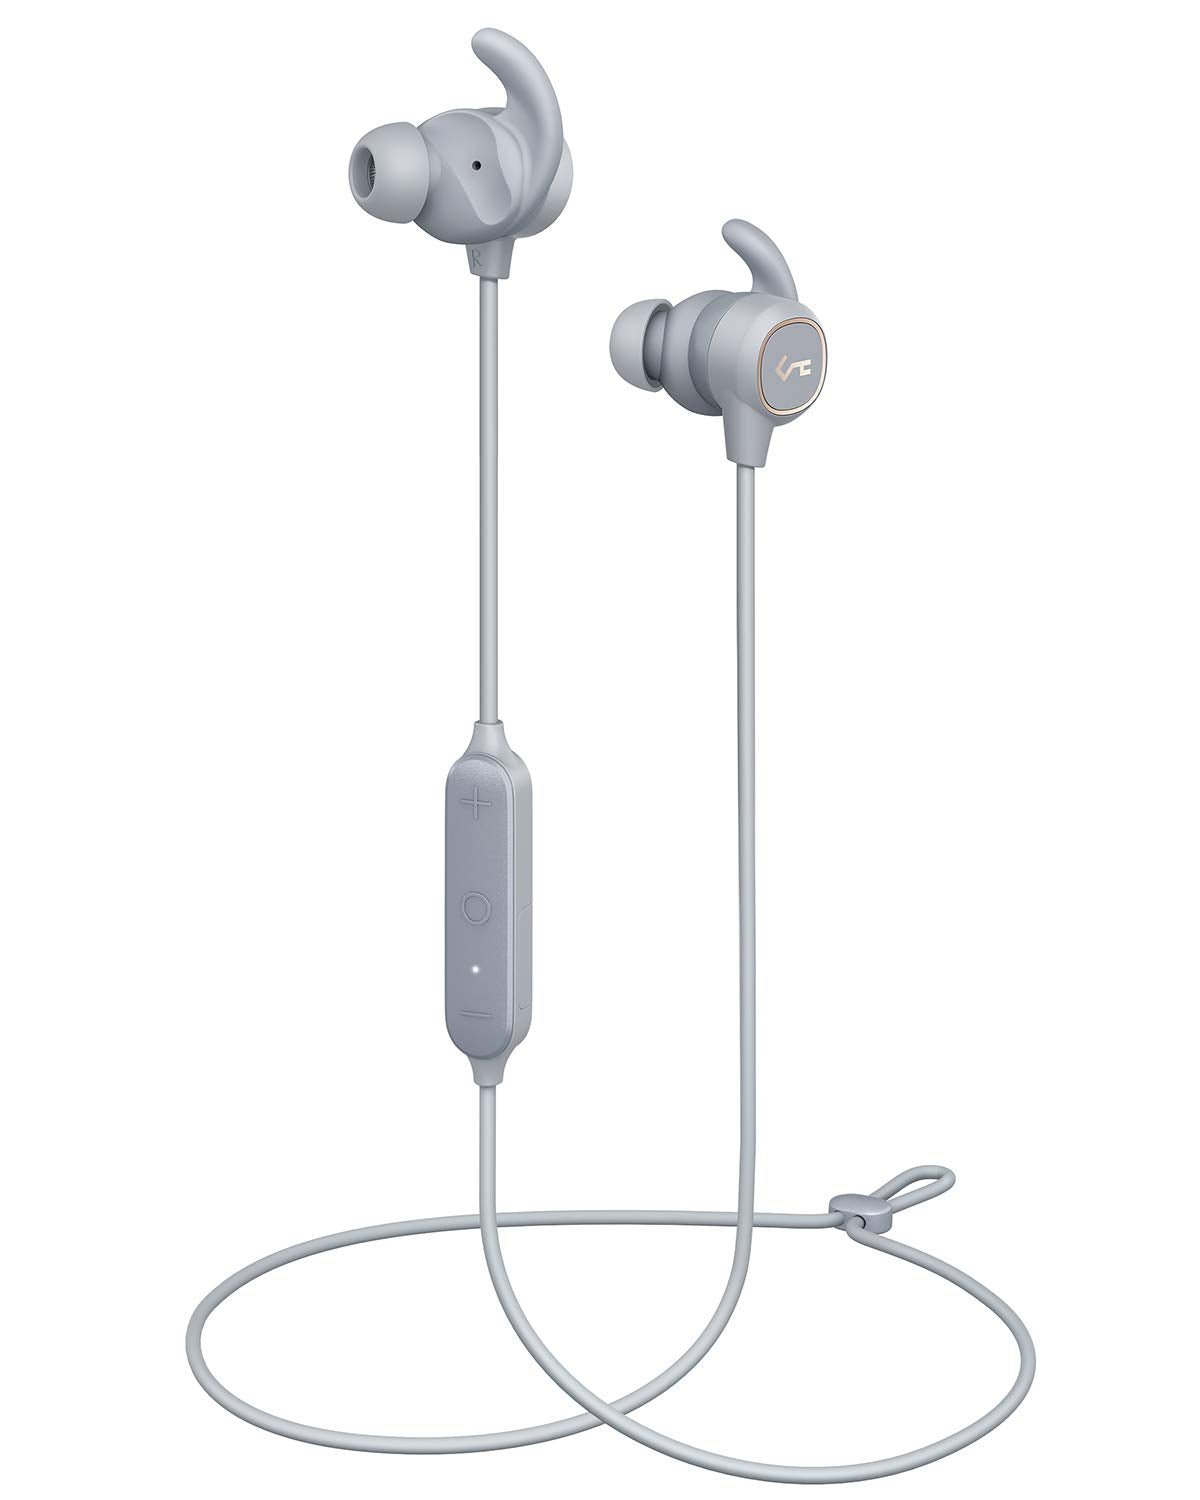 AUKEY Key Series B60 Magnetic Wireless Earbuds Bluetooth 5.0 Sport Earphones